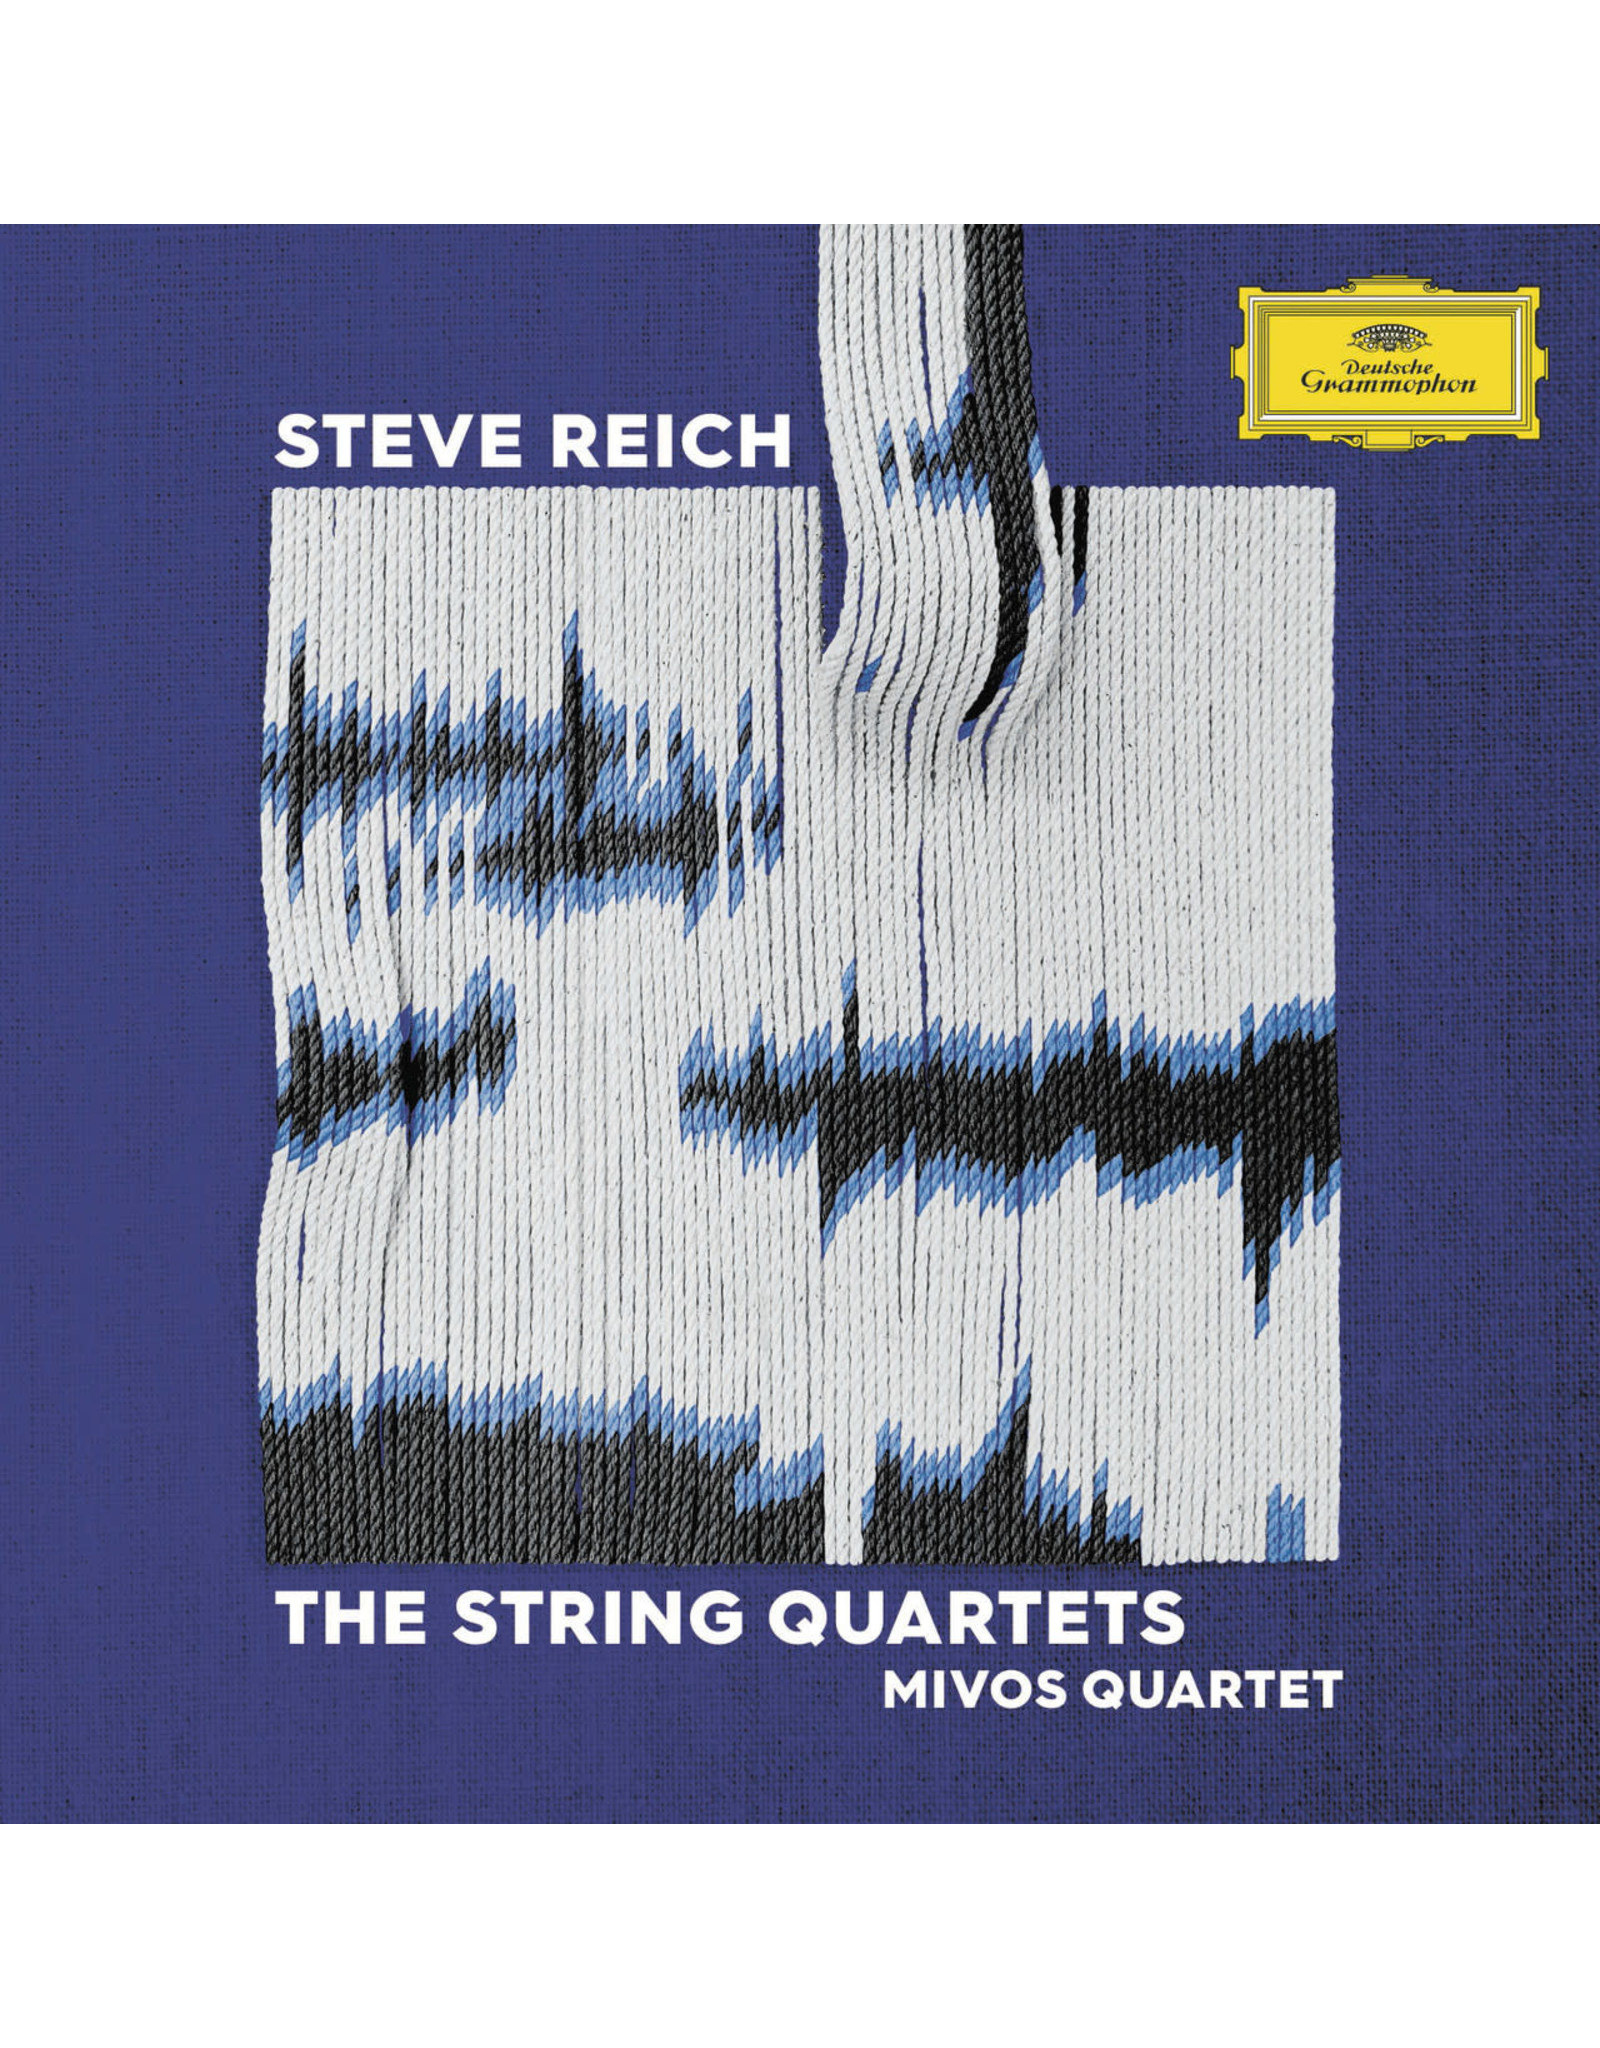 Deutsche Grammophon Mivos Quartet: Steve Reich: The String Quartets LP